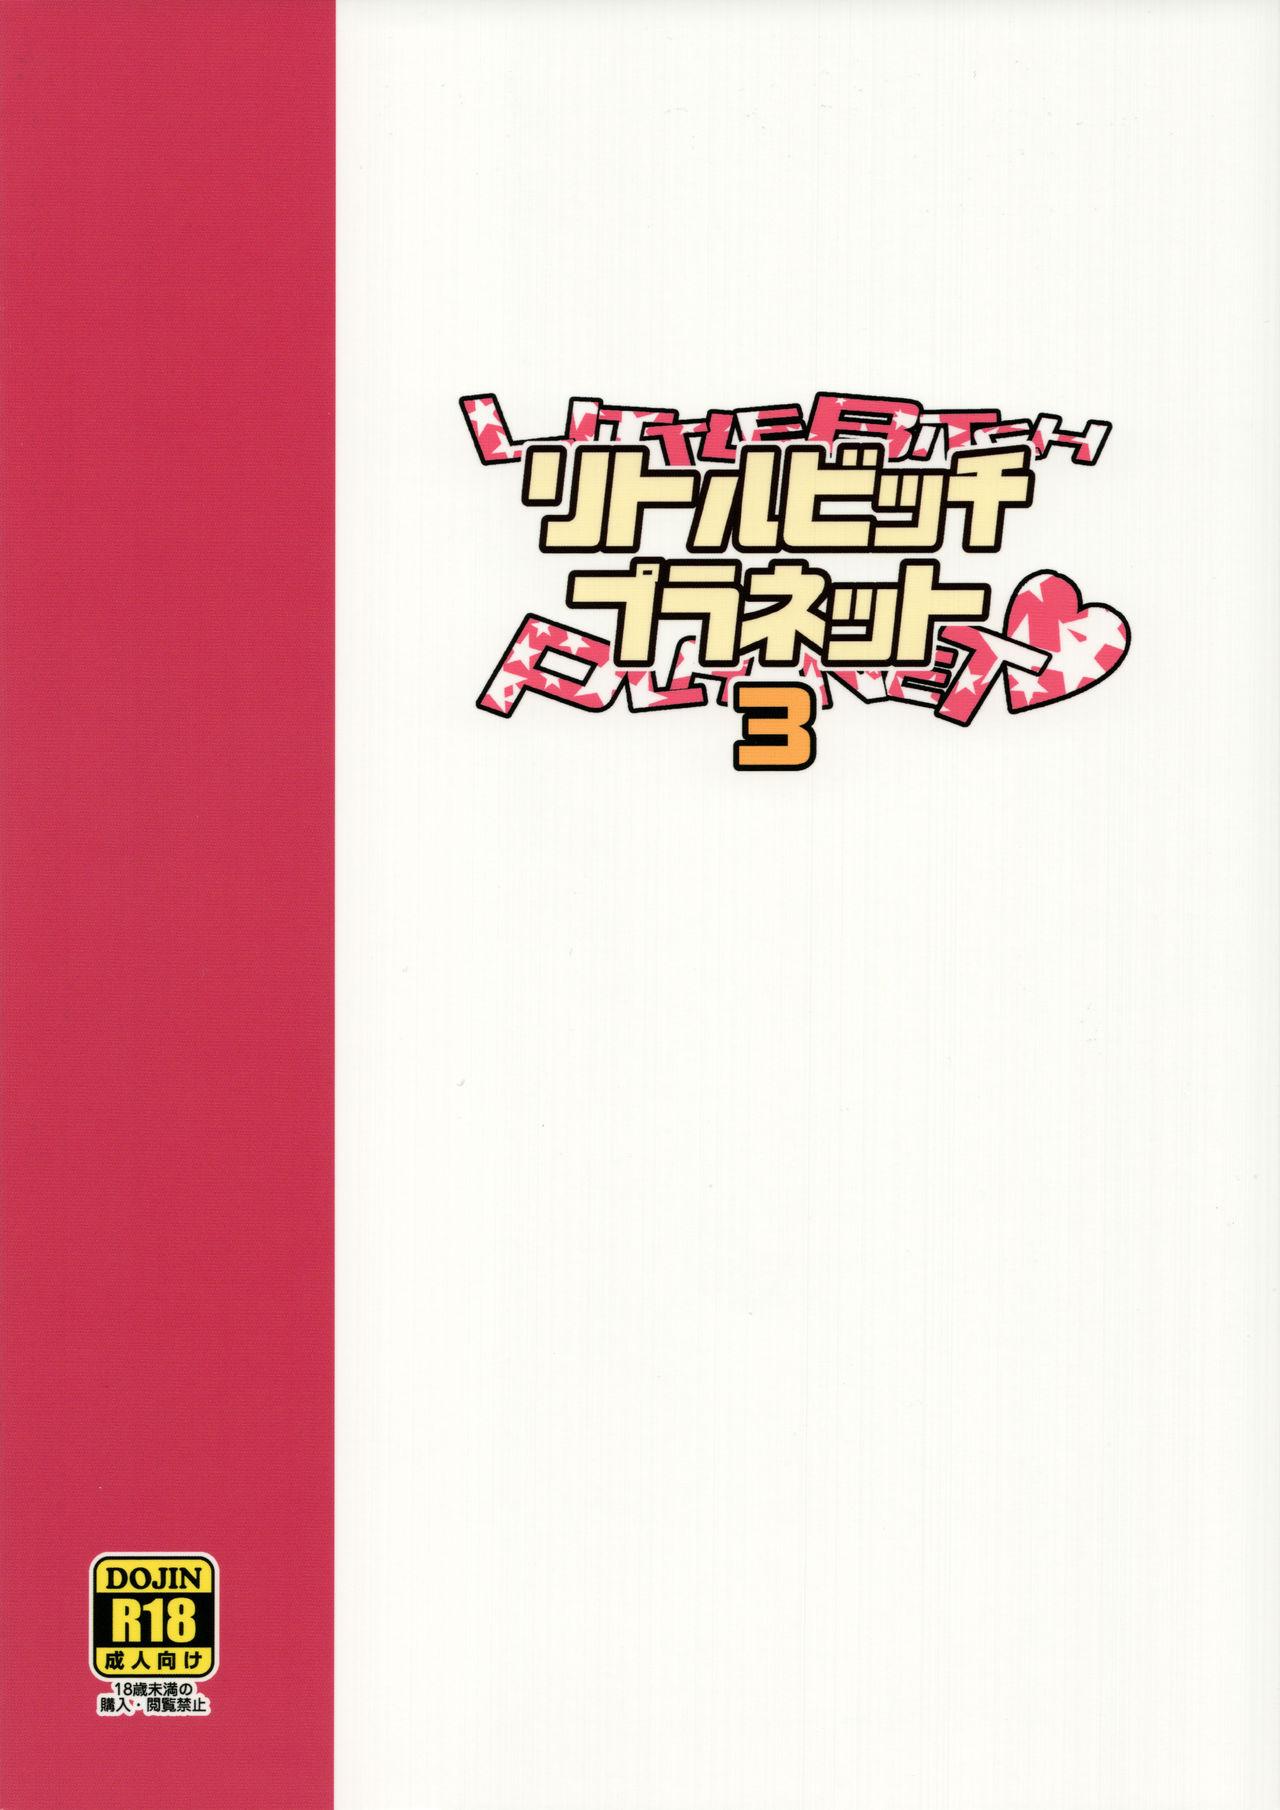 Little Bitch Planet vol.3(COMIC1☆13) [フニフニラボ (たまごろー)]  [中国翻訳](24页)